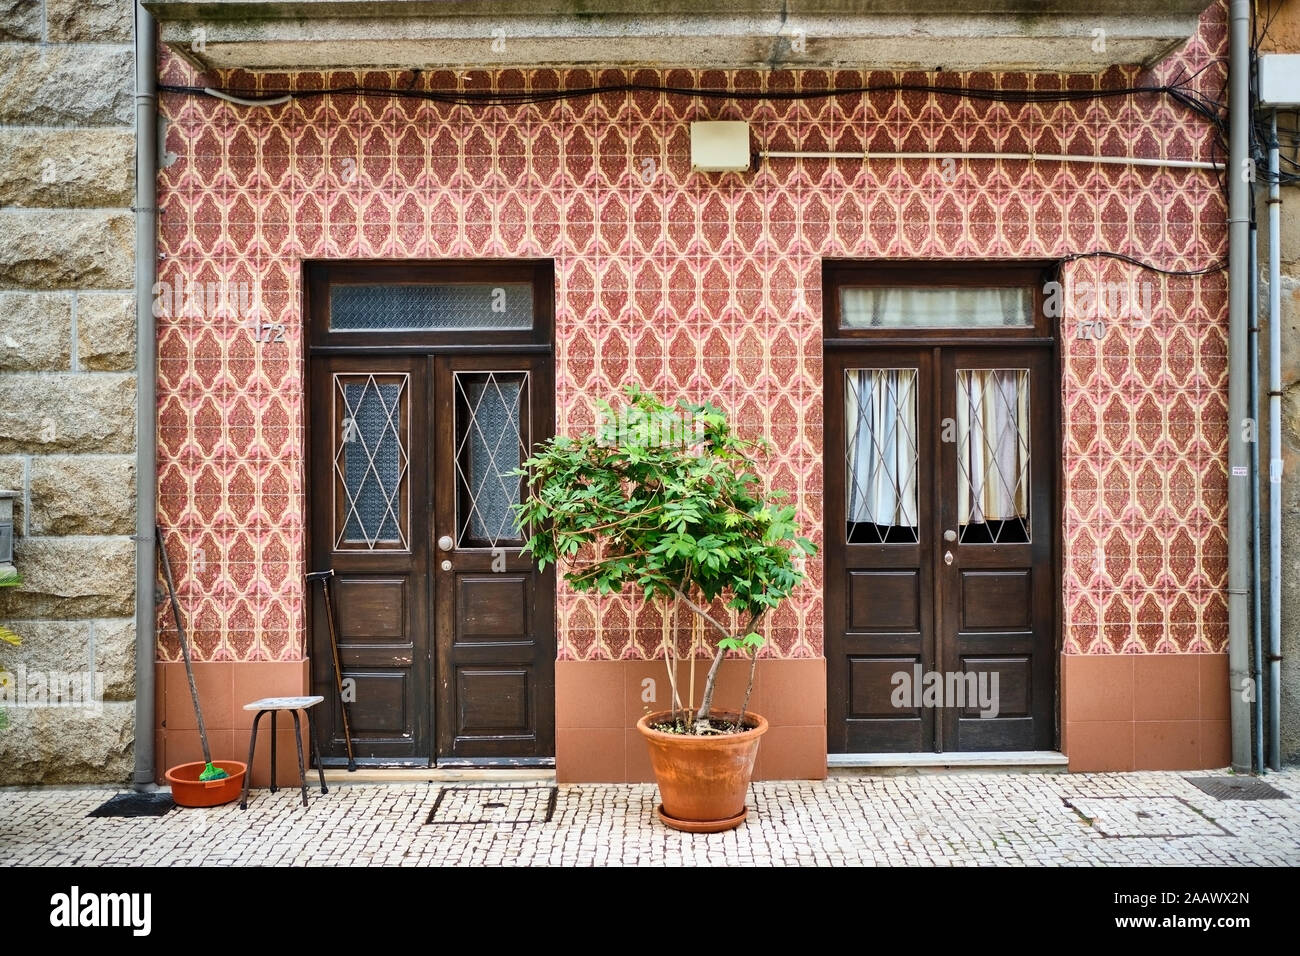 Portugal, Porto, Afurada, vista frontal de la singular fachada ornamentada casa Foto de stock